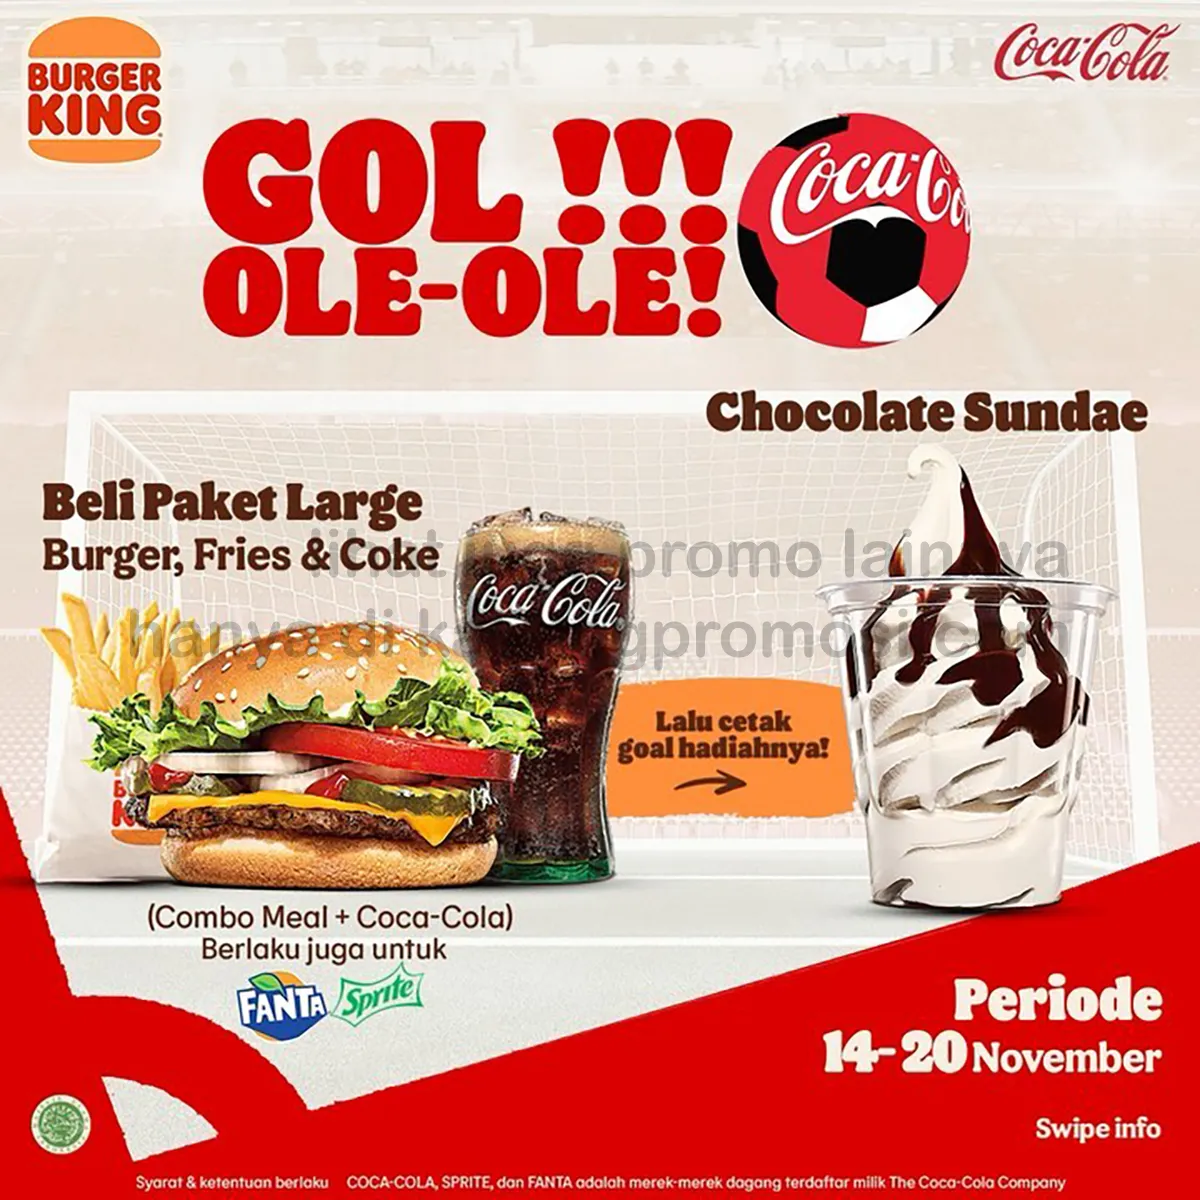 PROMO BURGER KING GOL! OLE-OLE! Beli Paket Large + Coca Cola GRATIS CHOCOLATE SUNDAE